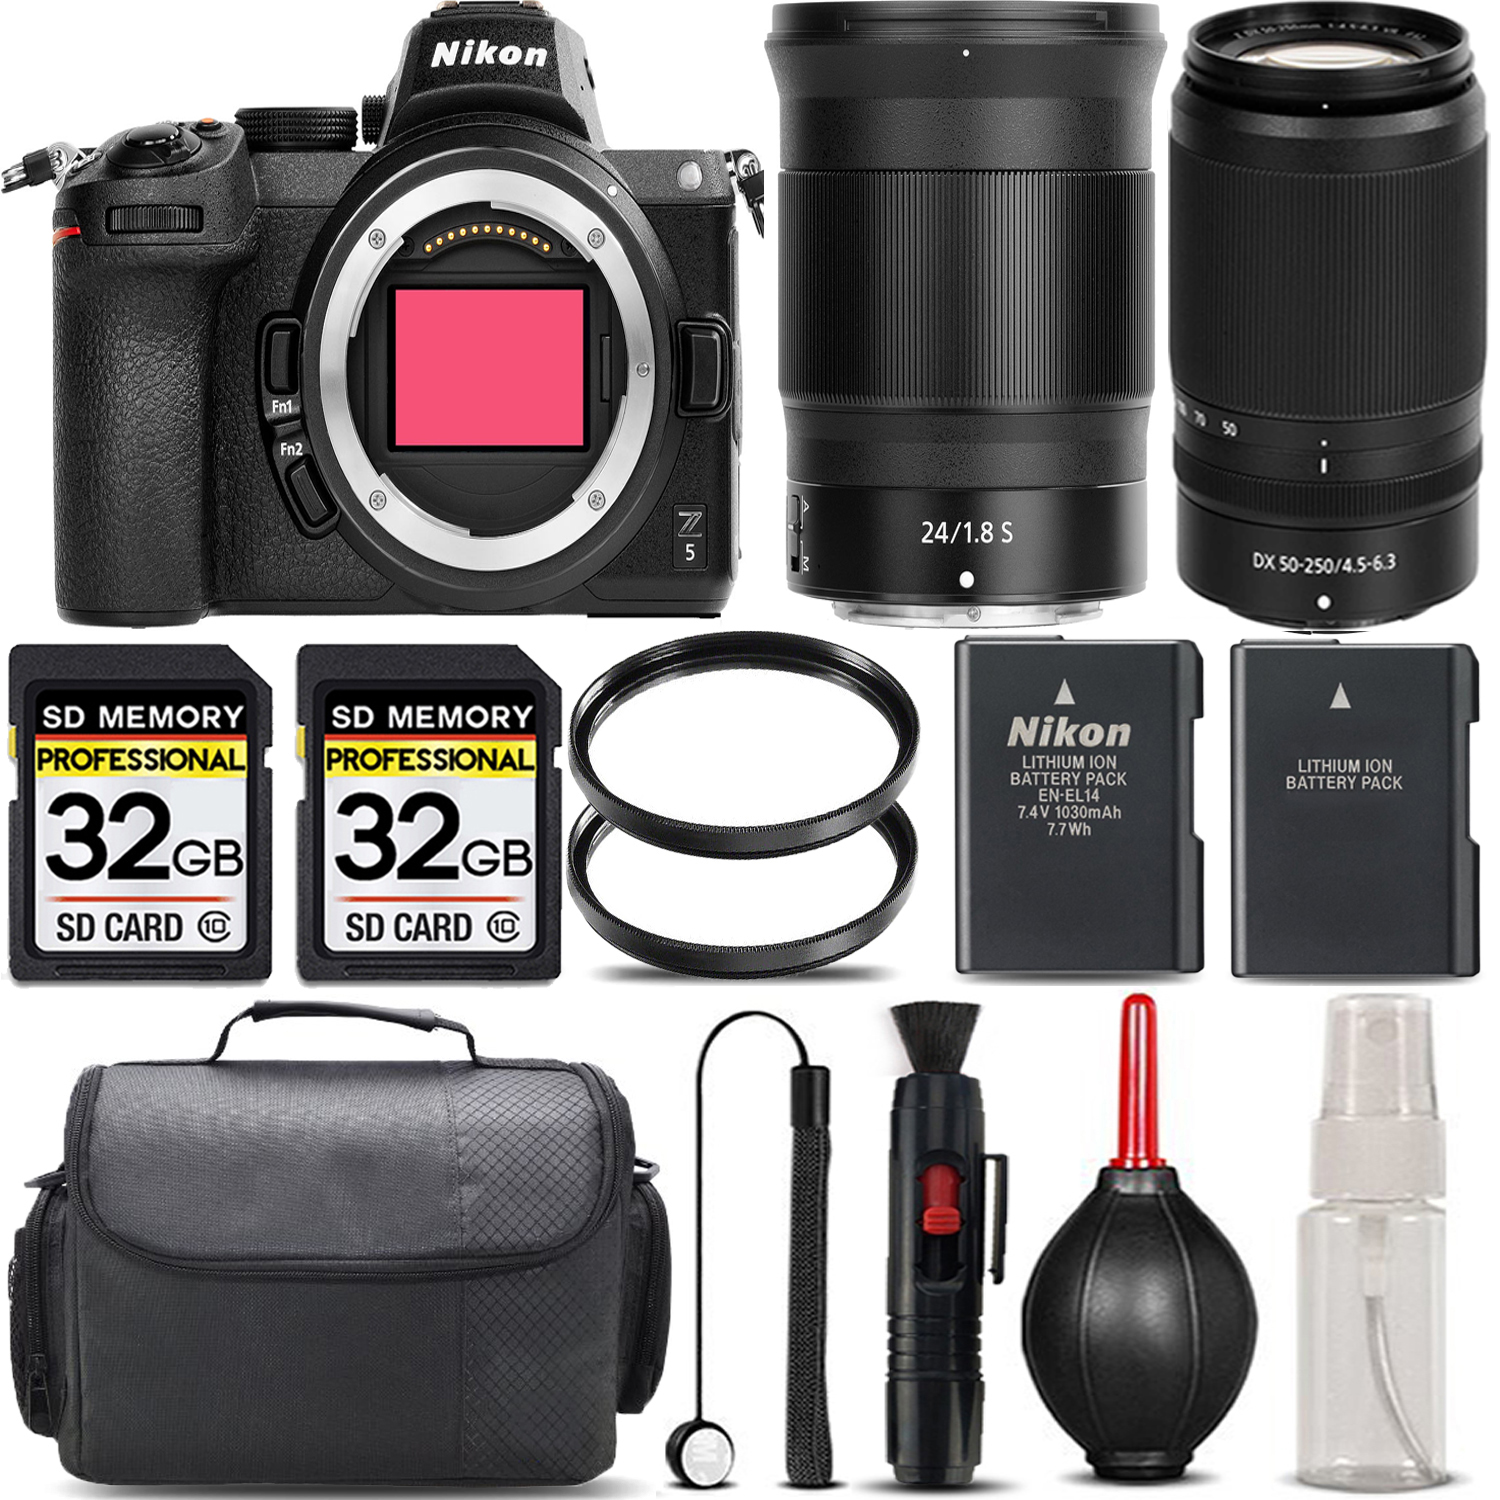 Z5 Camera + 50-250mm f/4.5-6.3 Lens + 24mm S Lens + Handbag - SAVE BIG KIT *FREE SHIPPING*